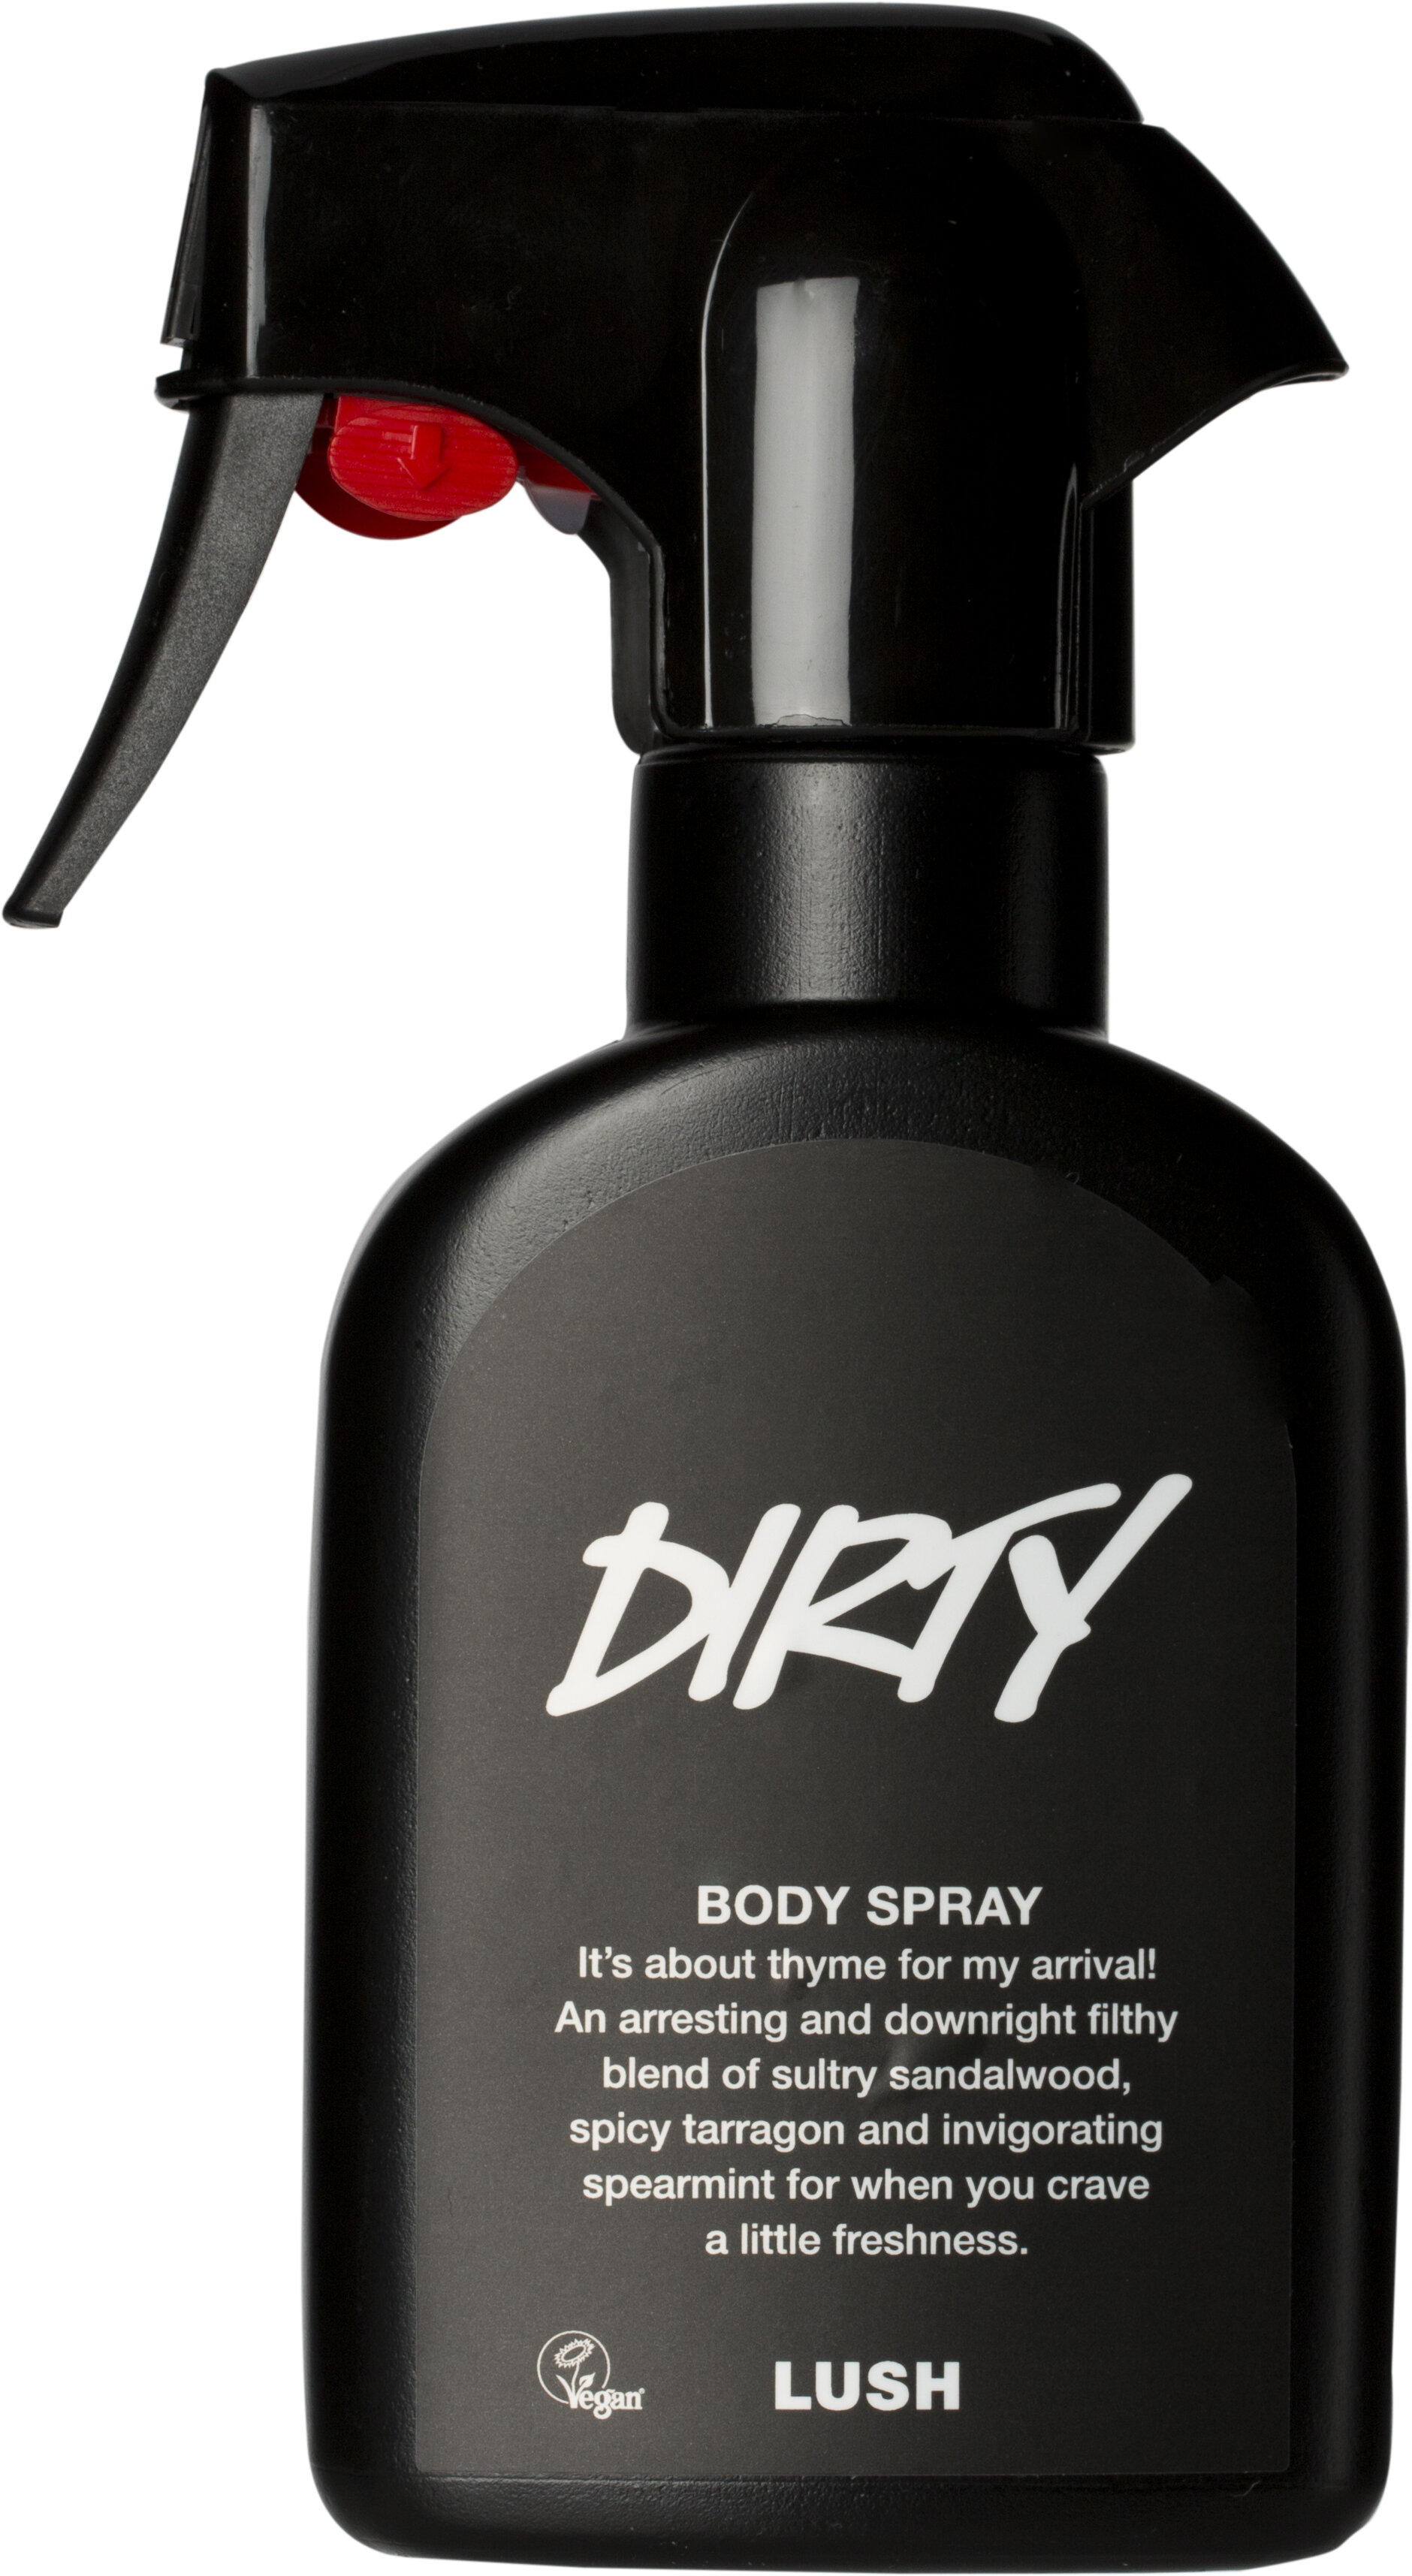 dirty_body_spray_commerce_2017.jpg